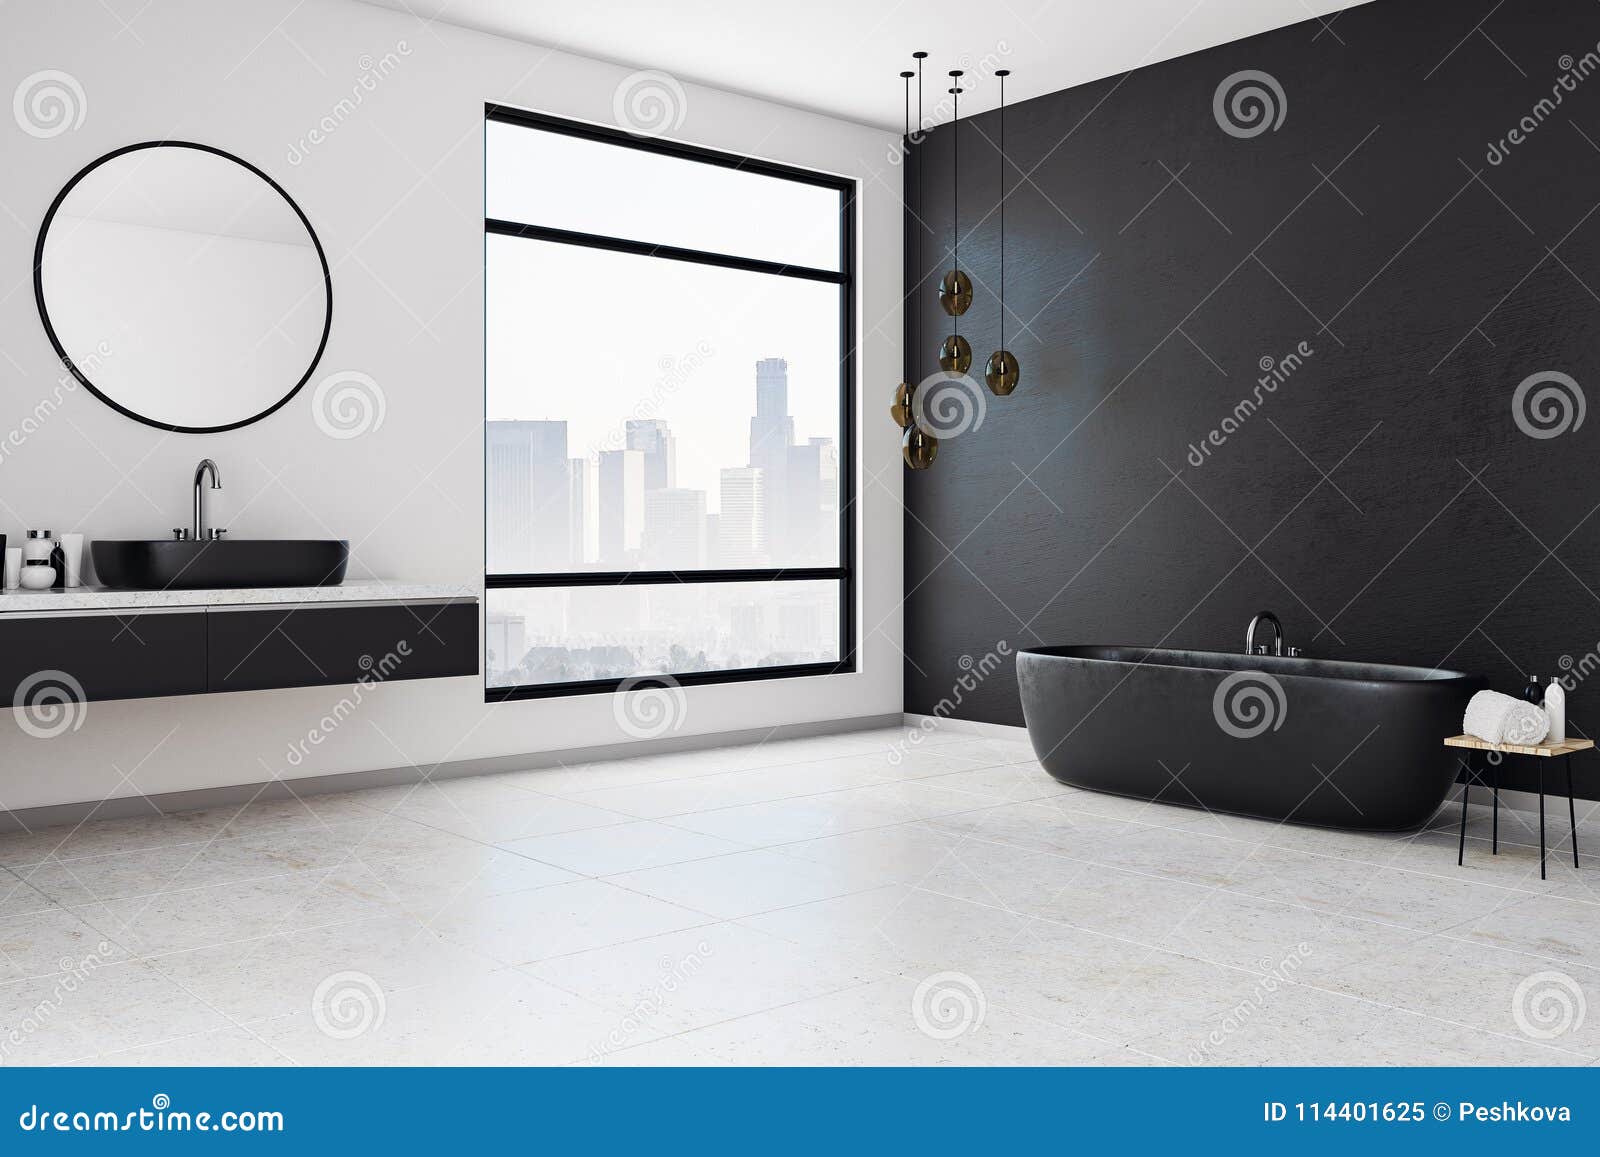 Clean bathroom interior stock illustration. Illustration of estate ...